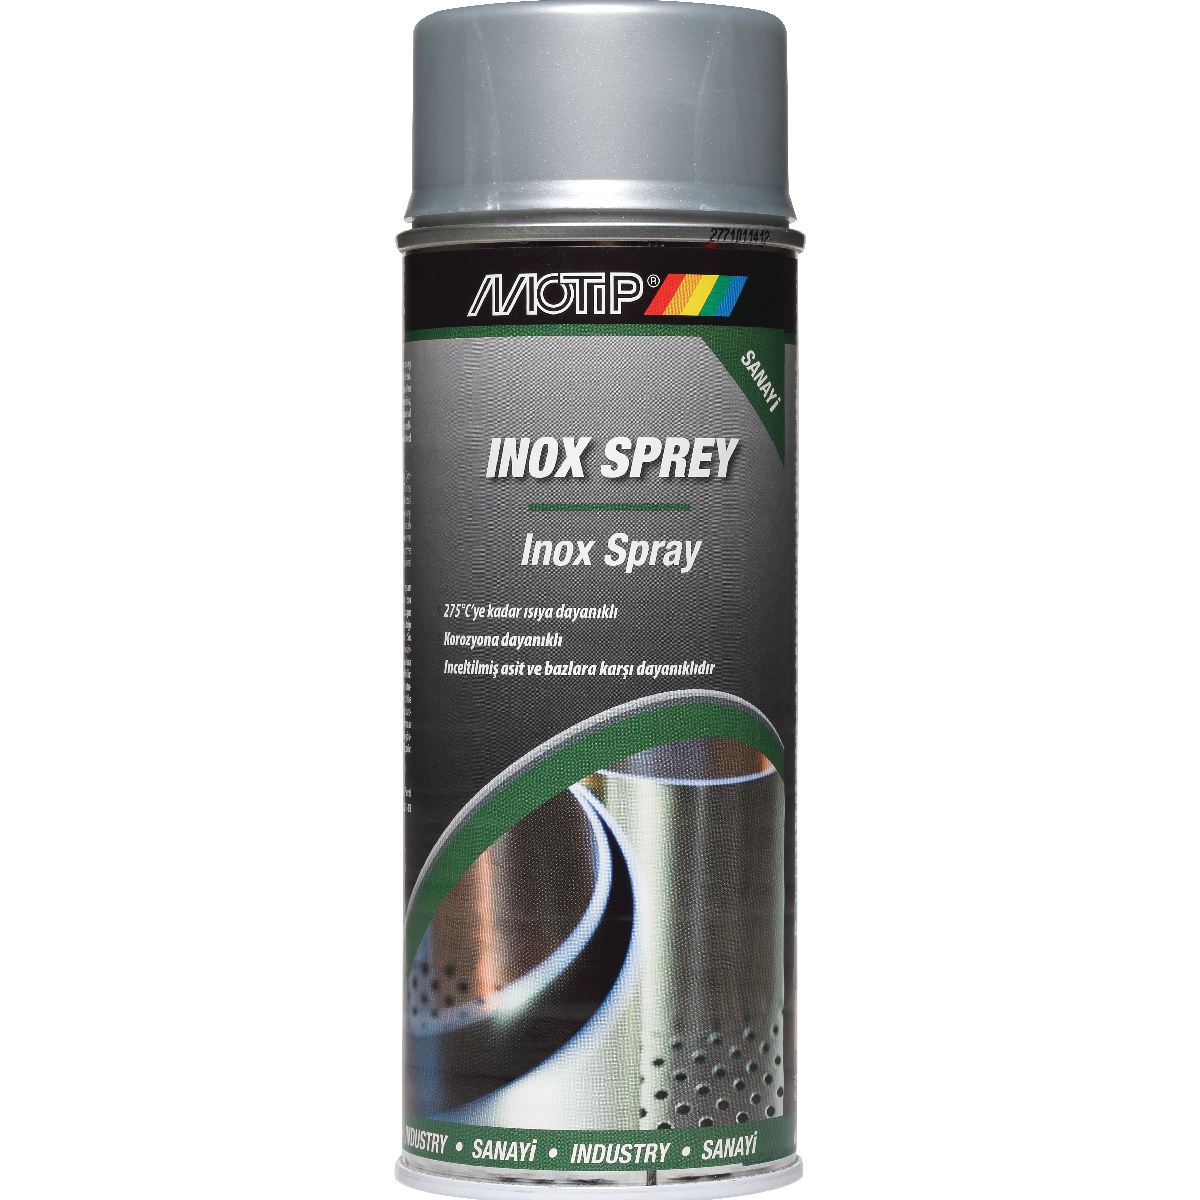 Motip Inox Spray - PERMOLİT BOYA